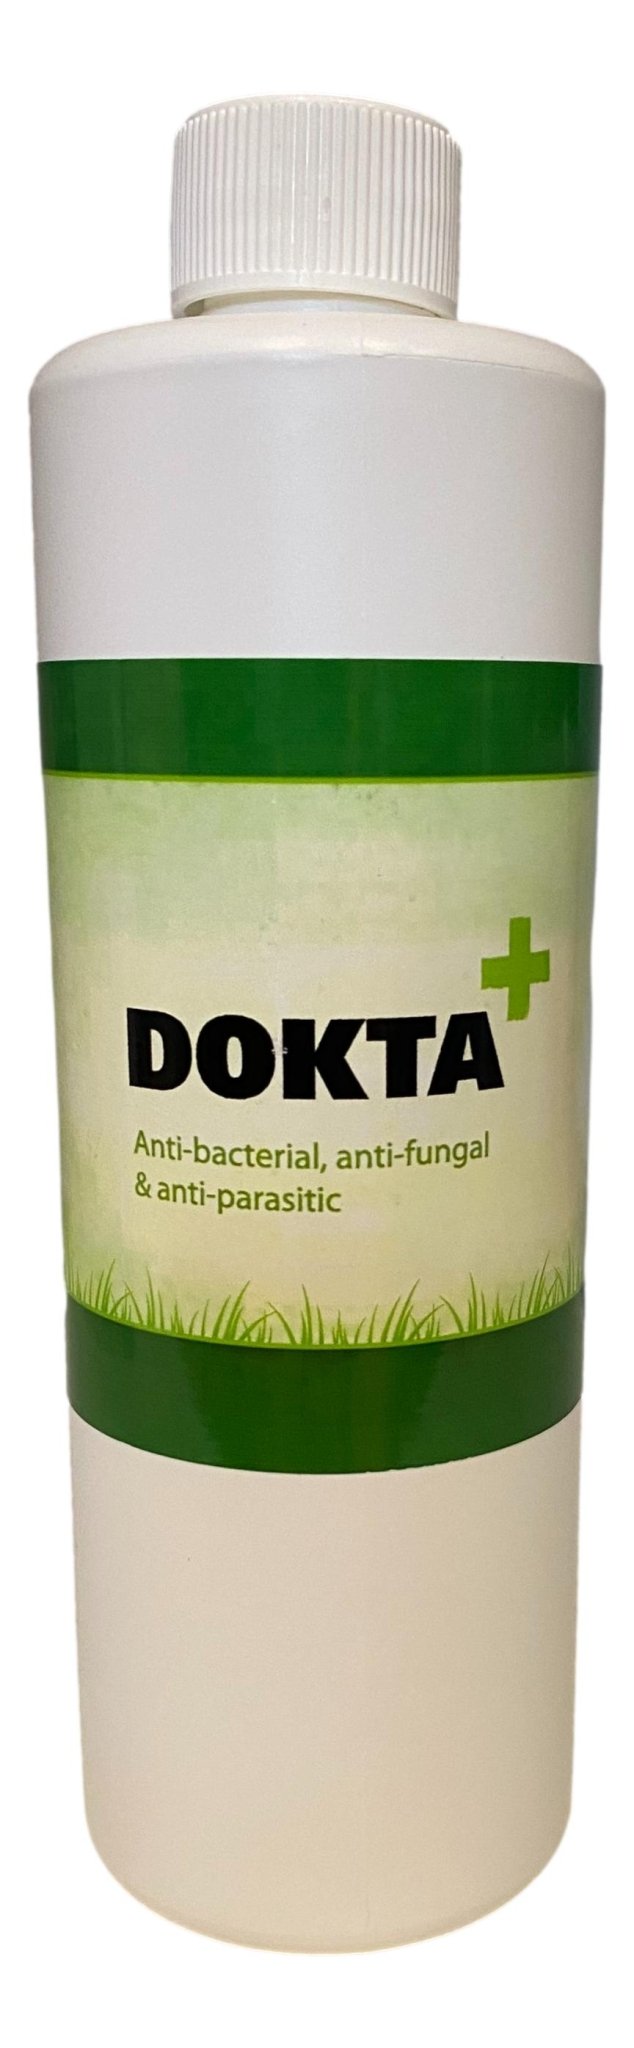 Pet Dokta Healing Tonic - Tuck In Healthy Pet Food & Animal Natural Health Supplies